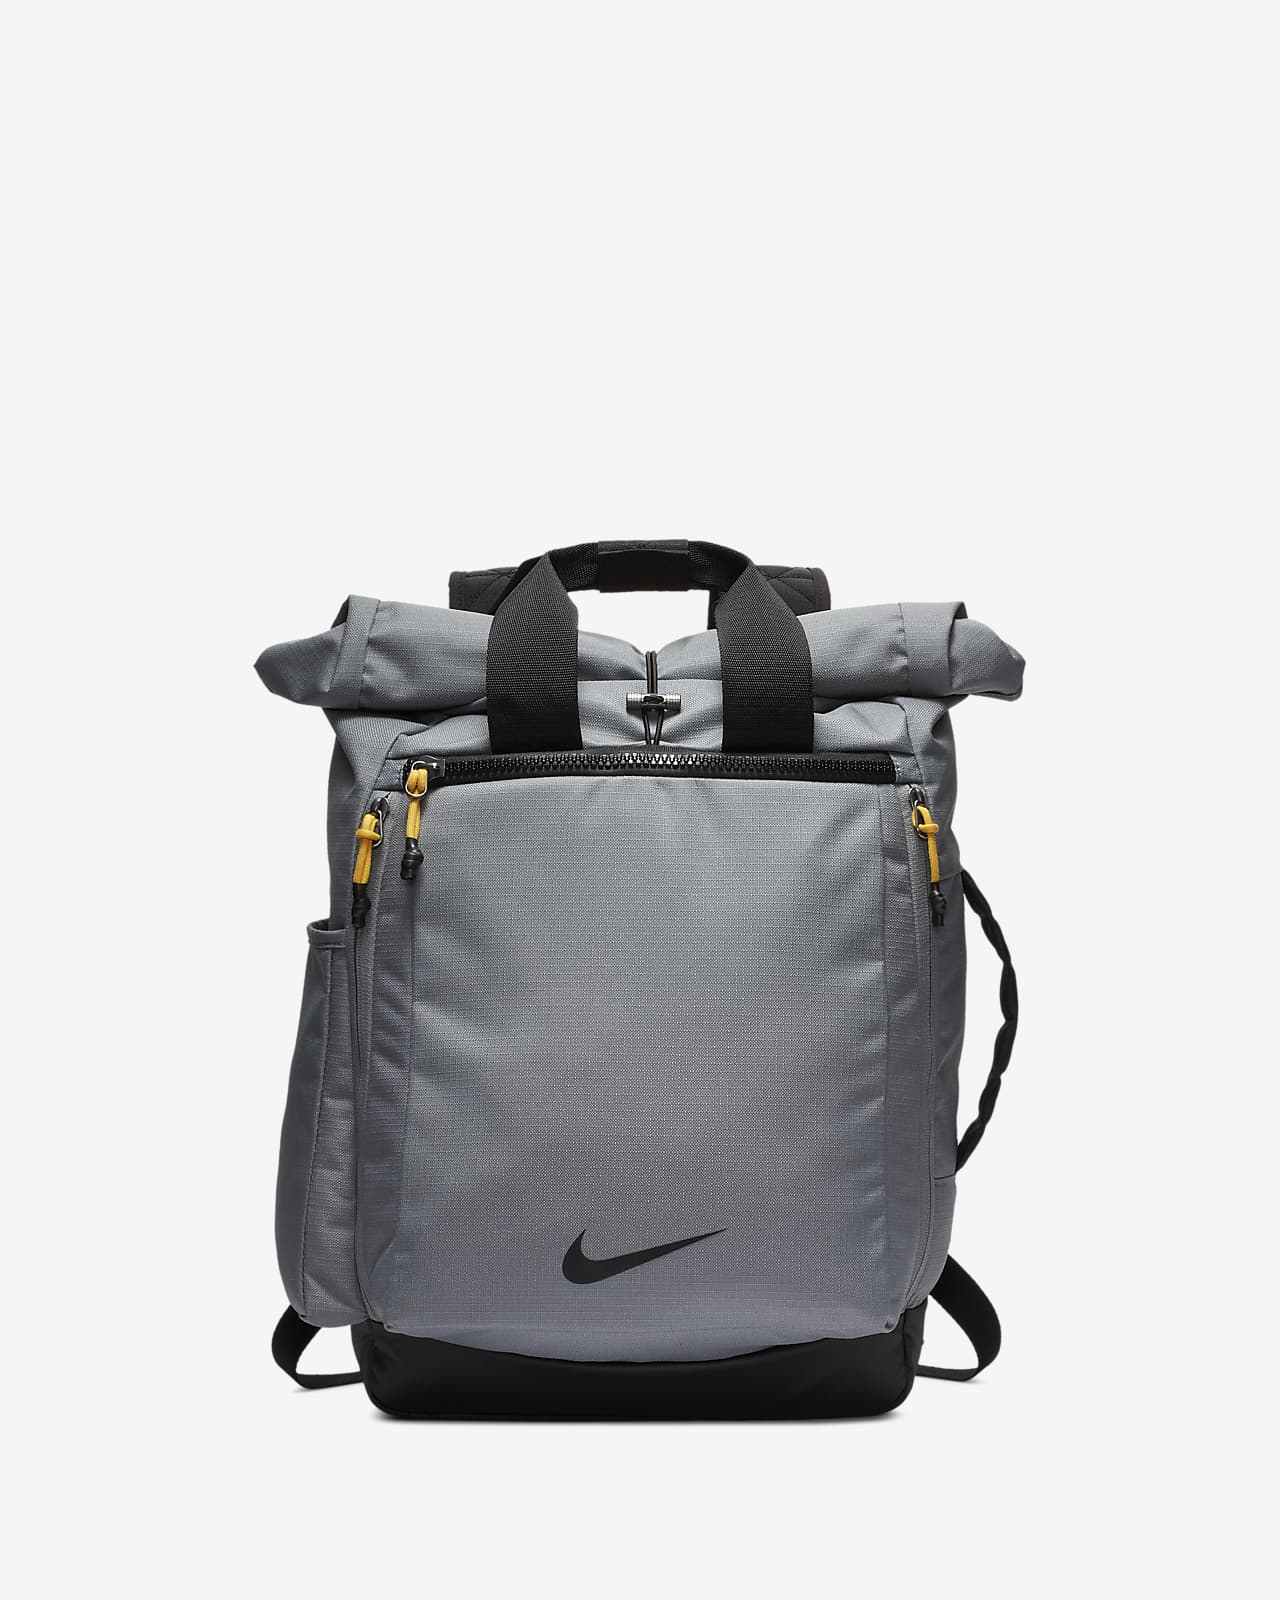 Рюкзак для гольфа Nike Sport. Nike RU